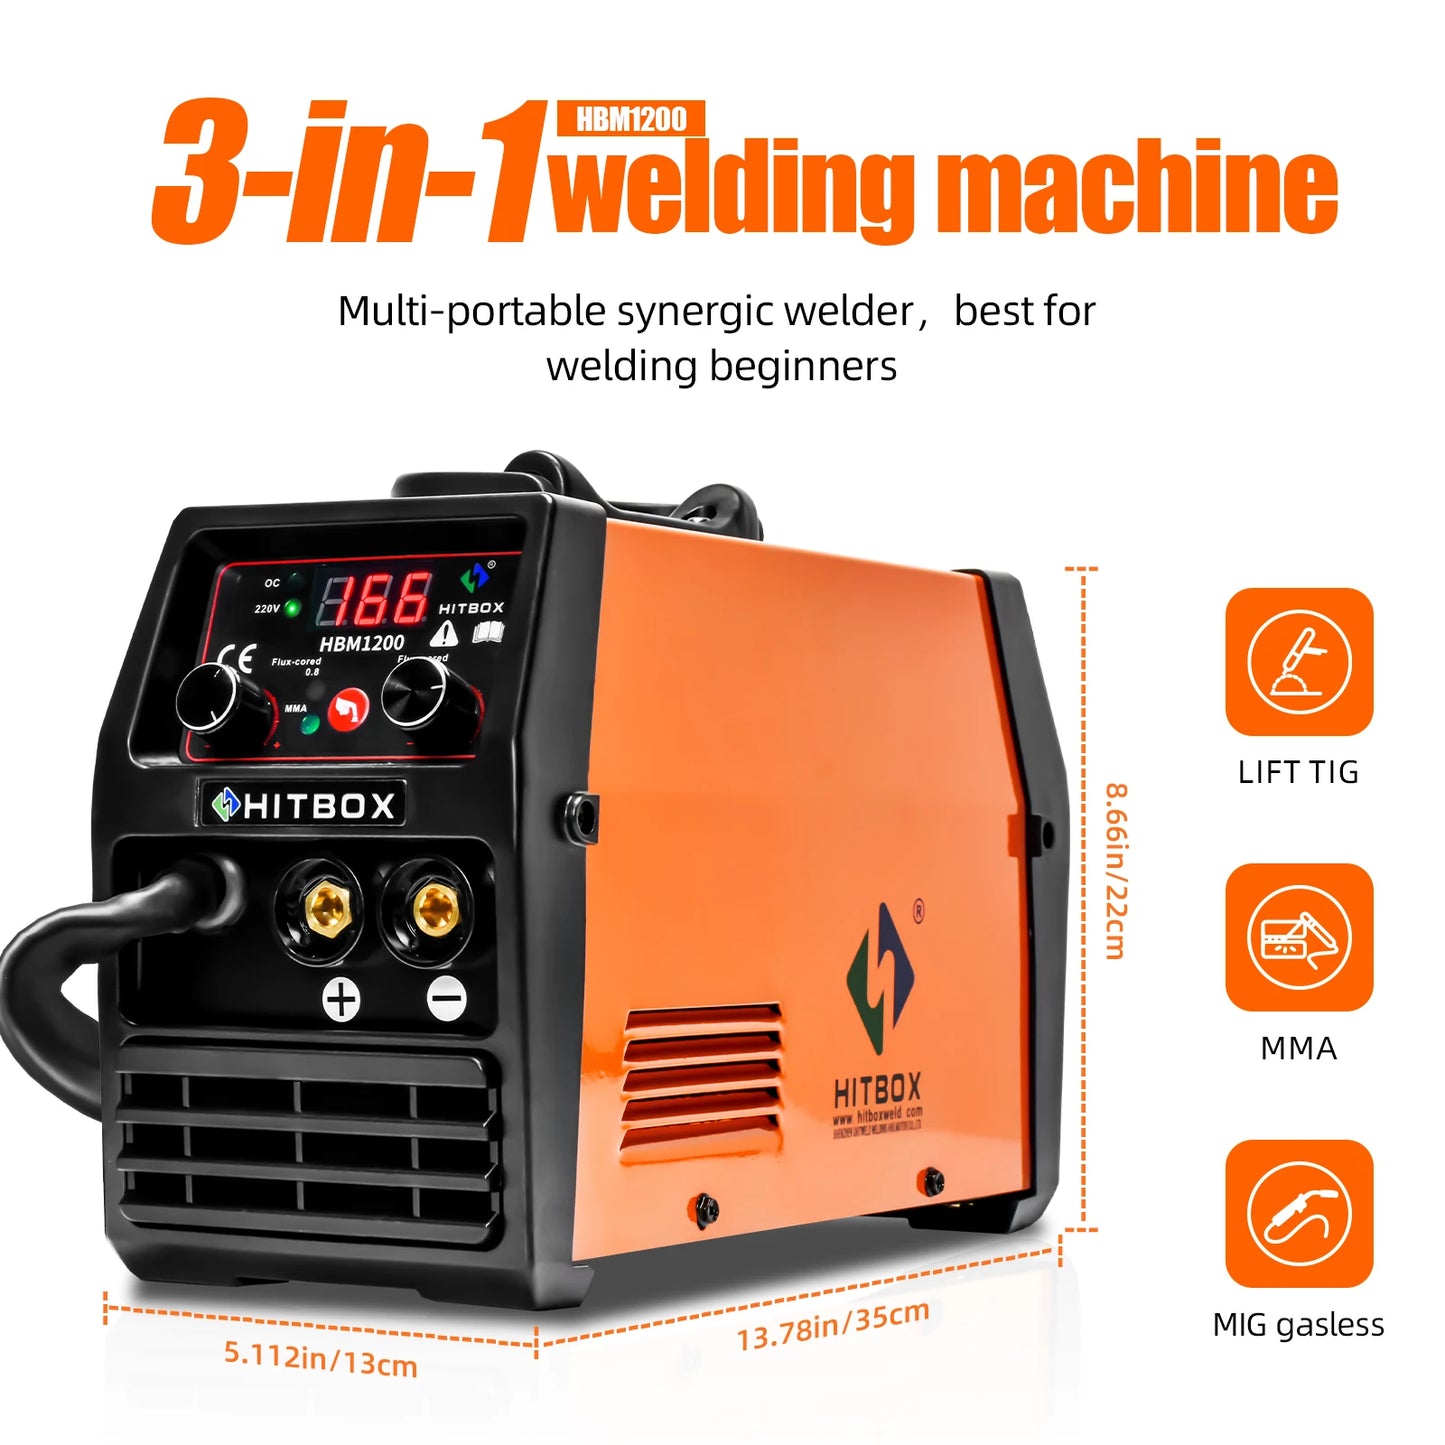 HITBOX Mig Welding Machine Synergy HBM1200 Semi-Automatic 3 in 1 Inverter Tig Argon Arc MIG Gas-Less Soldering Welder 110V 220V